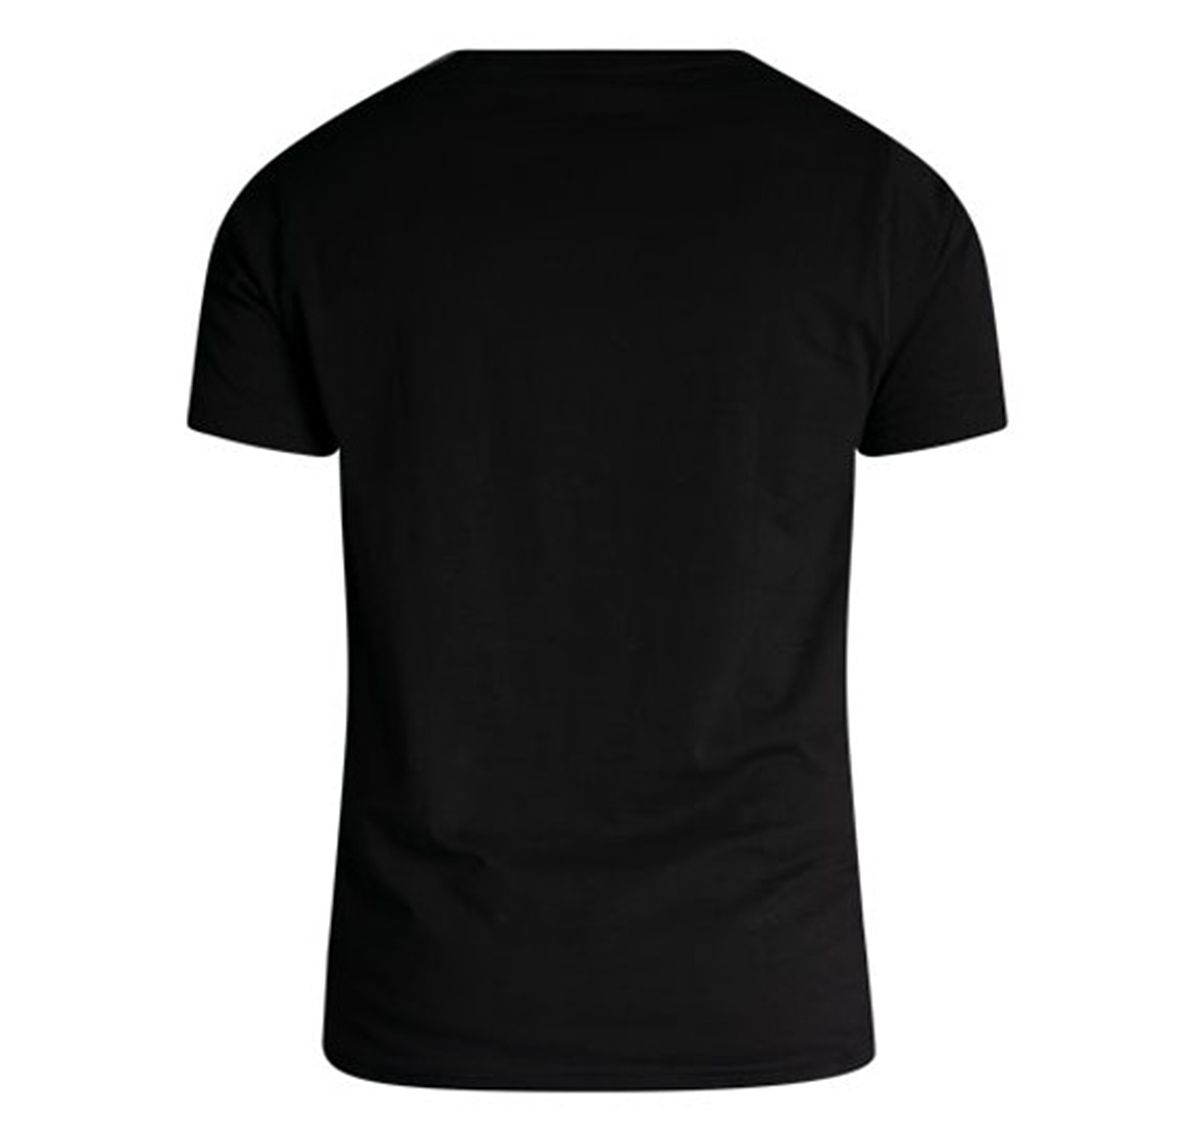 aussieBum T-Shirt DESIGNER TEE ARVO, black